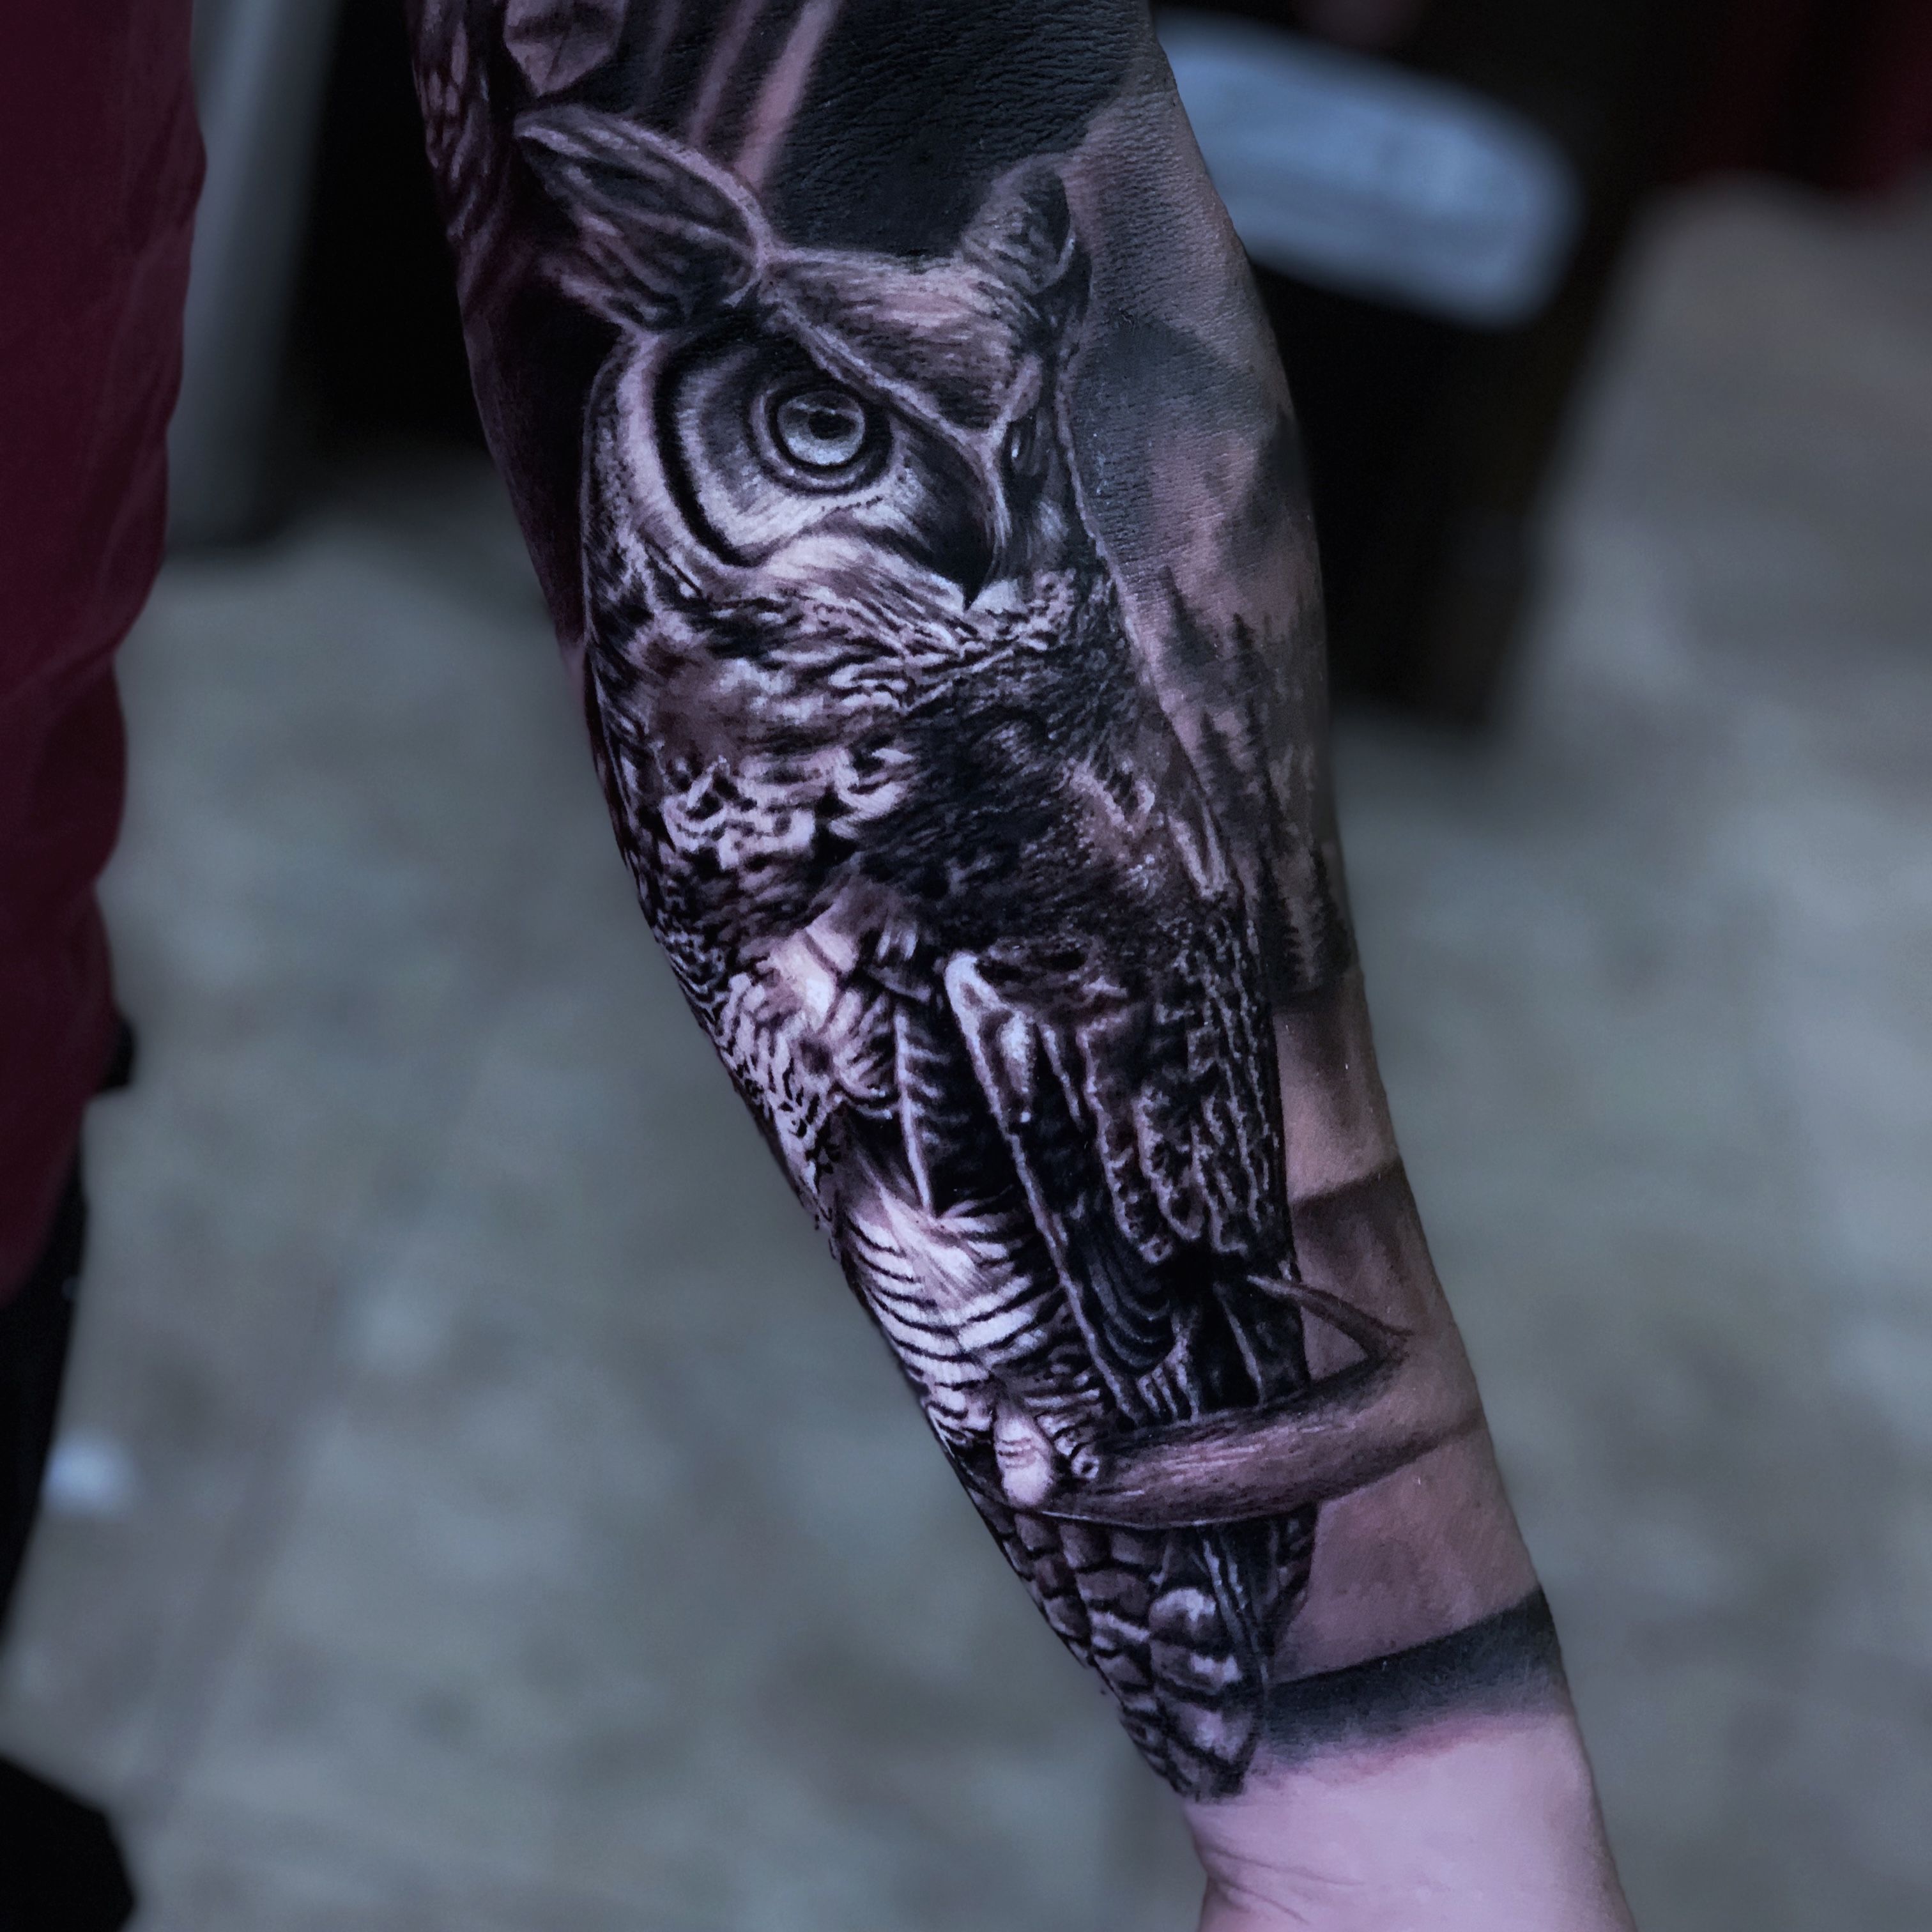 the owl tattoo outline - The Owl Tattoo Design - Pin | TeePublic